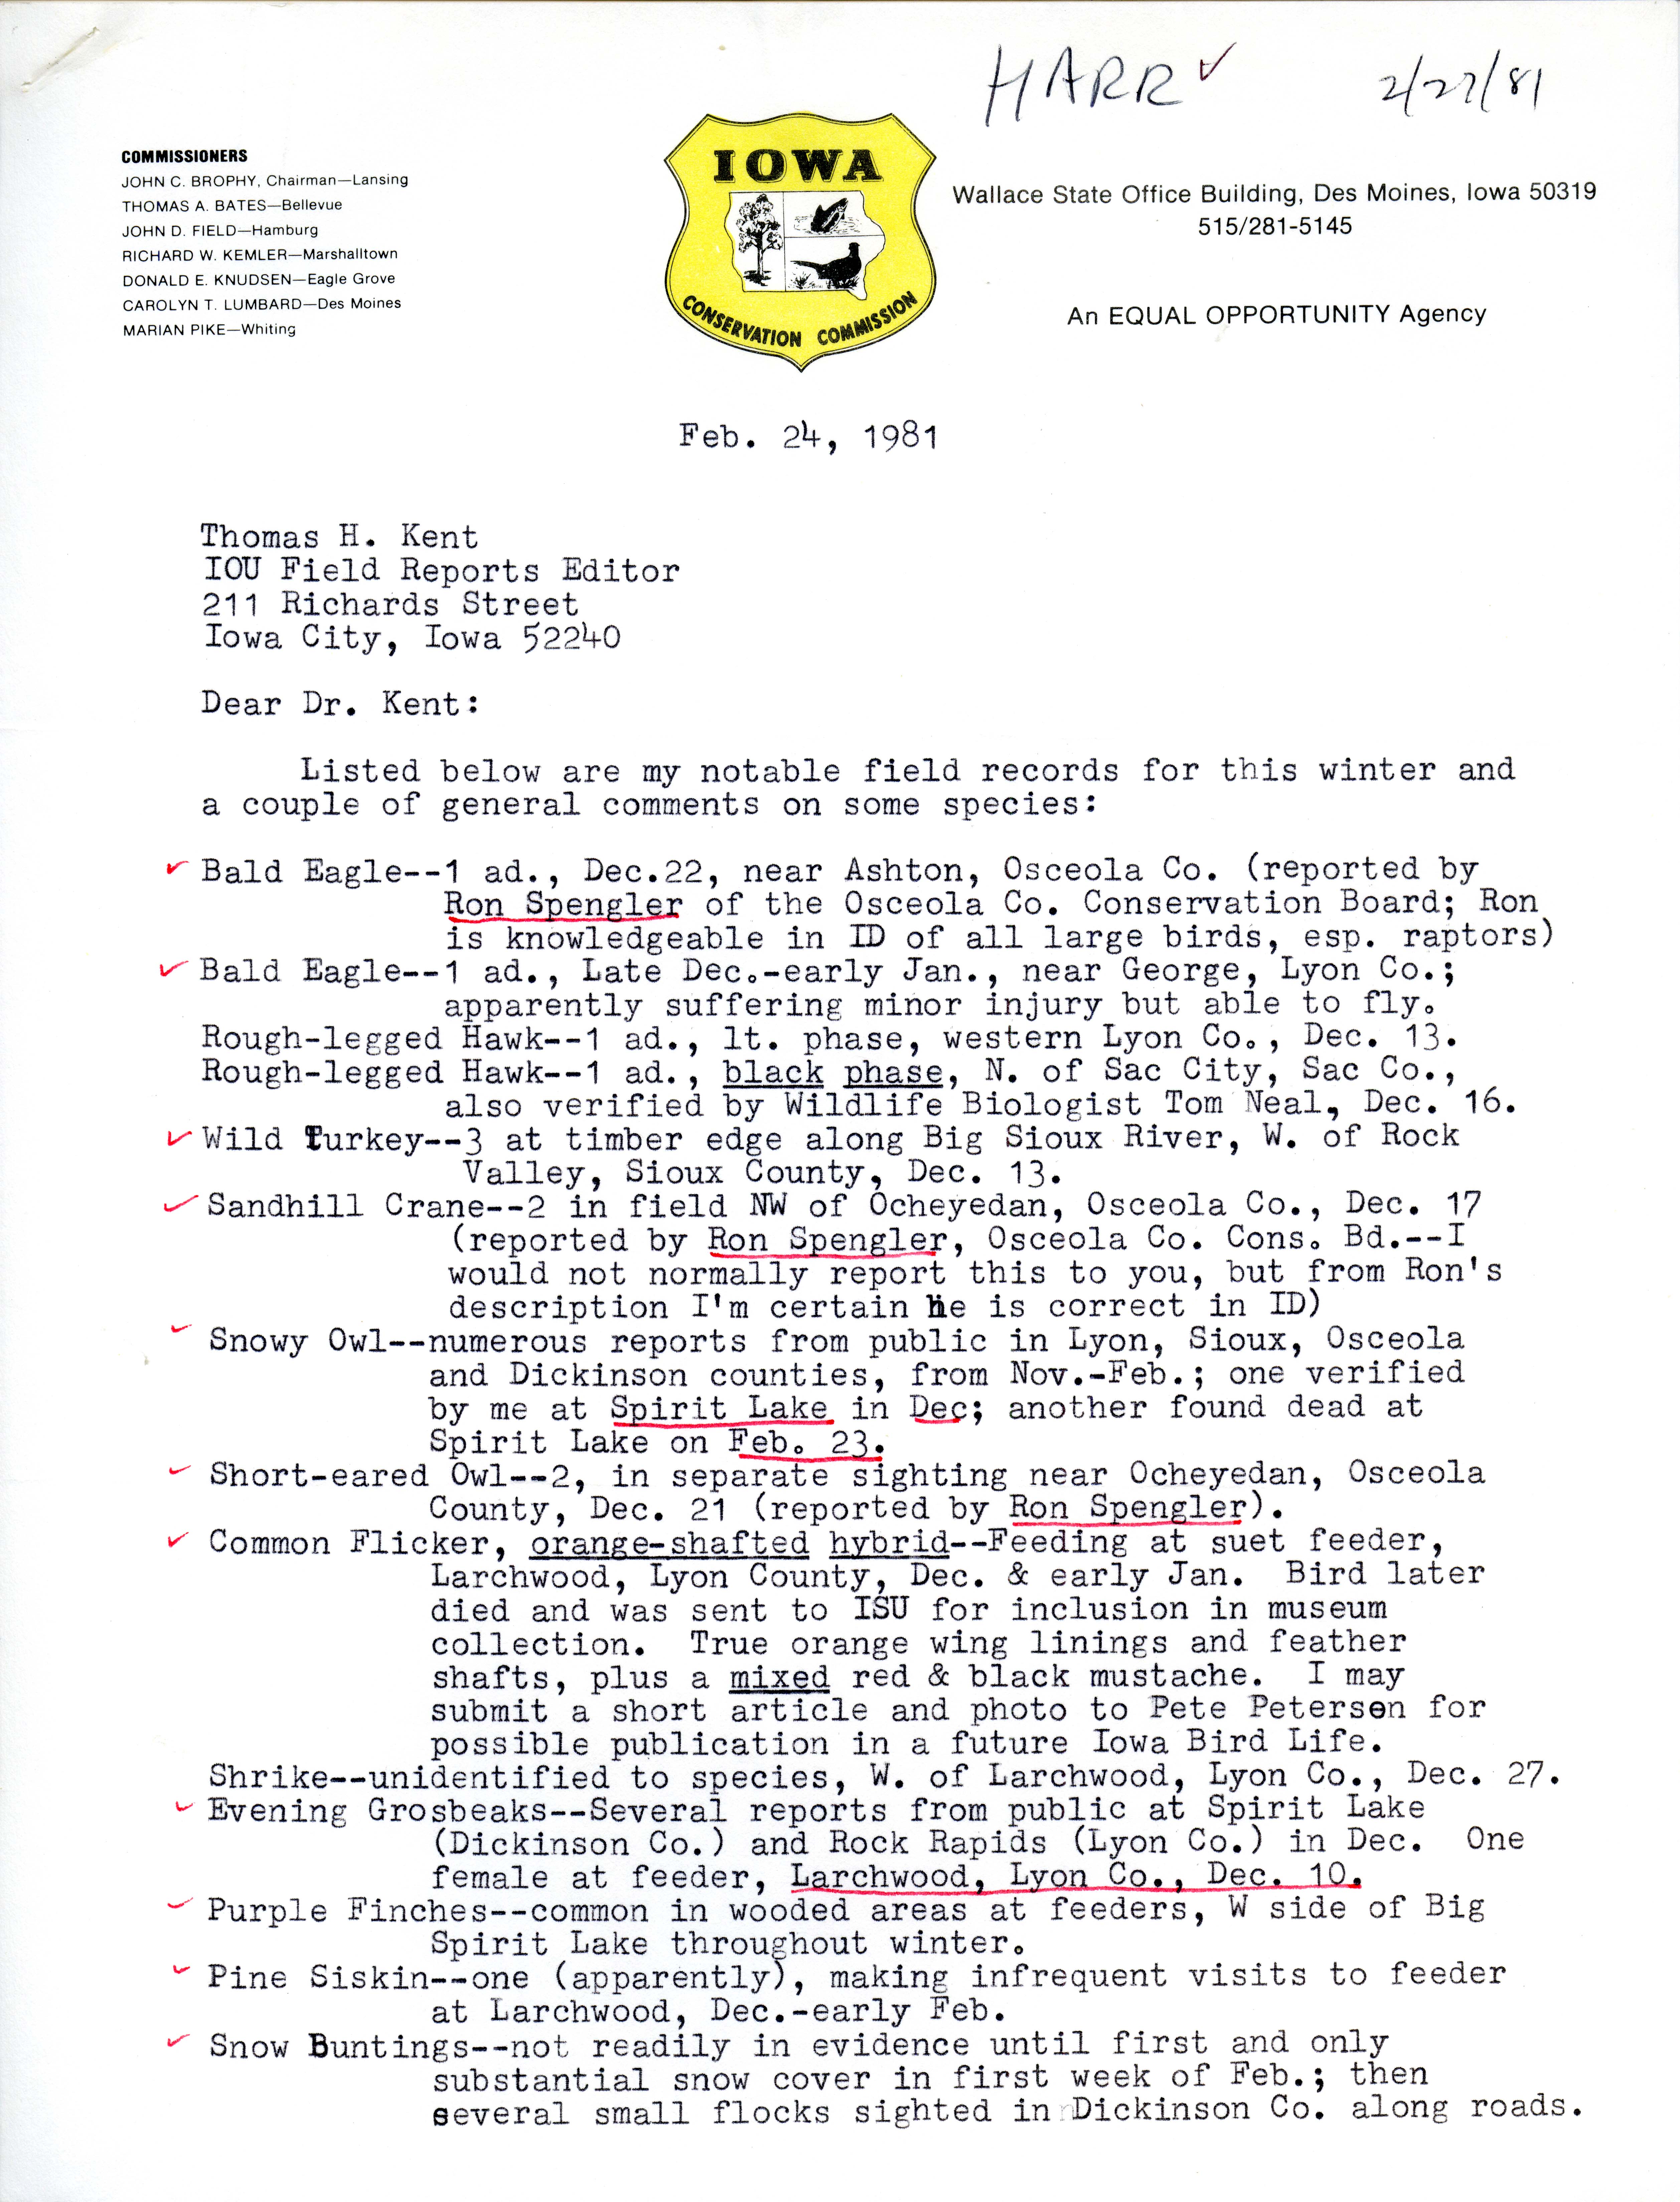 Douglas C. Harr letter to Thomas Kent regarding notable field records for winter, February 24, 1981